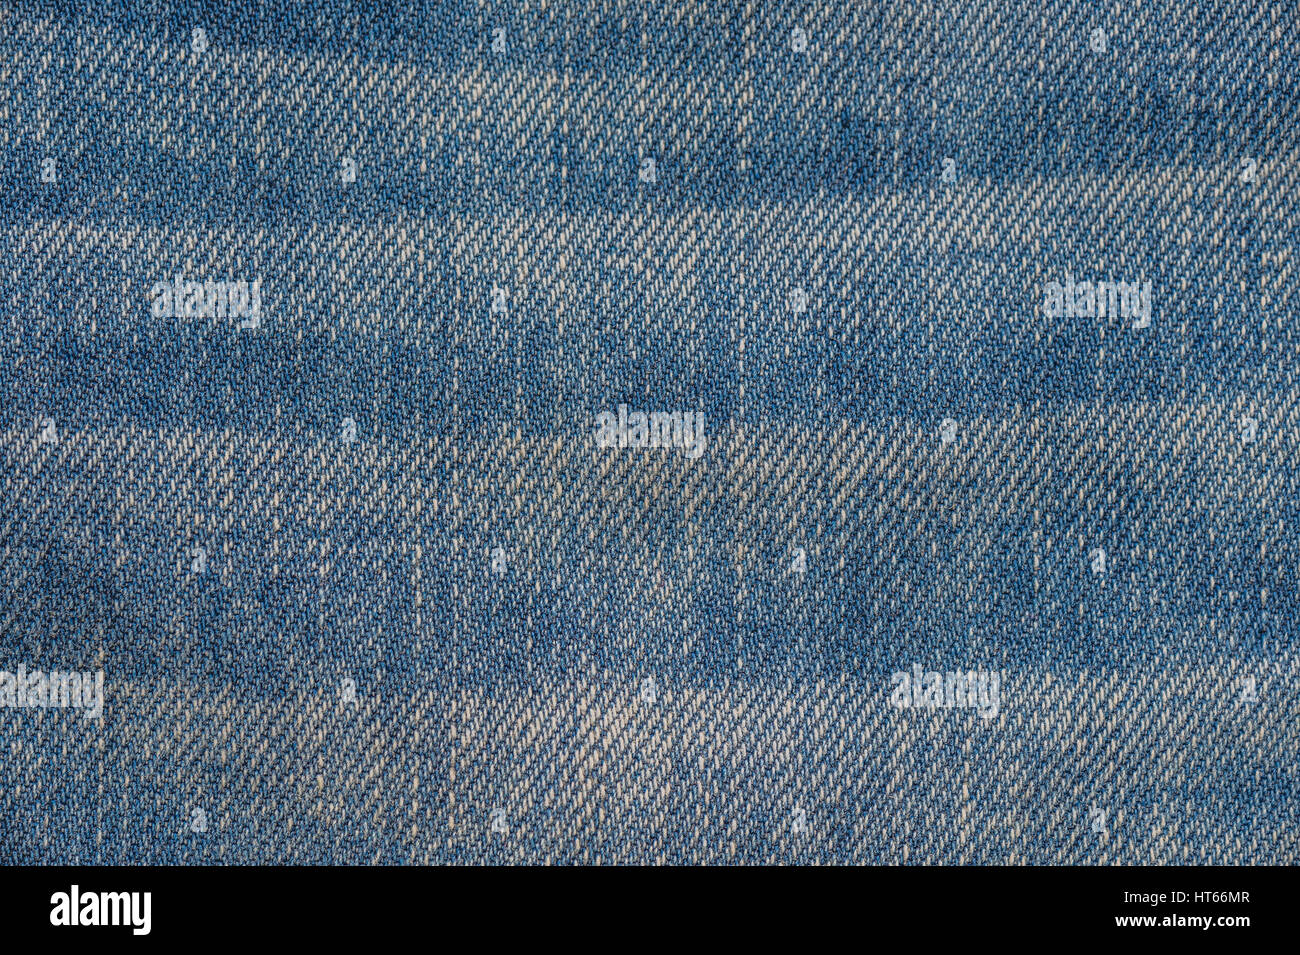 Jeans texture. Denim fabric background Stock Photo